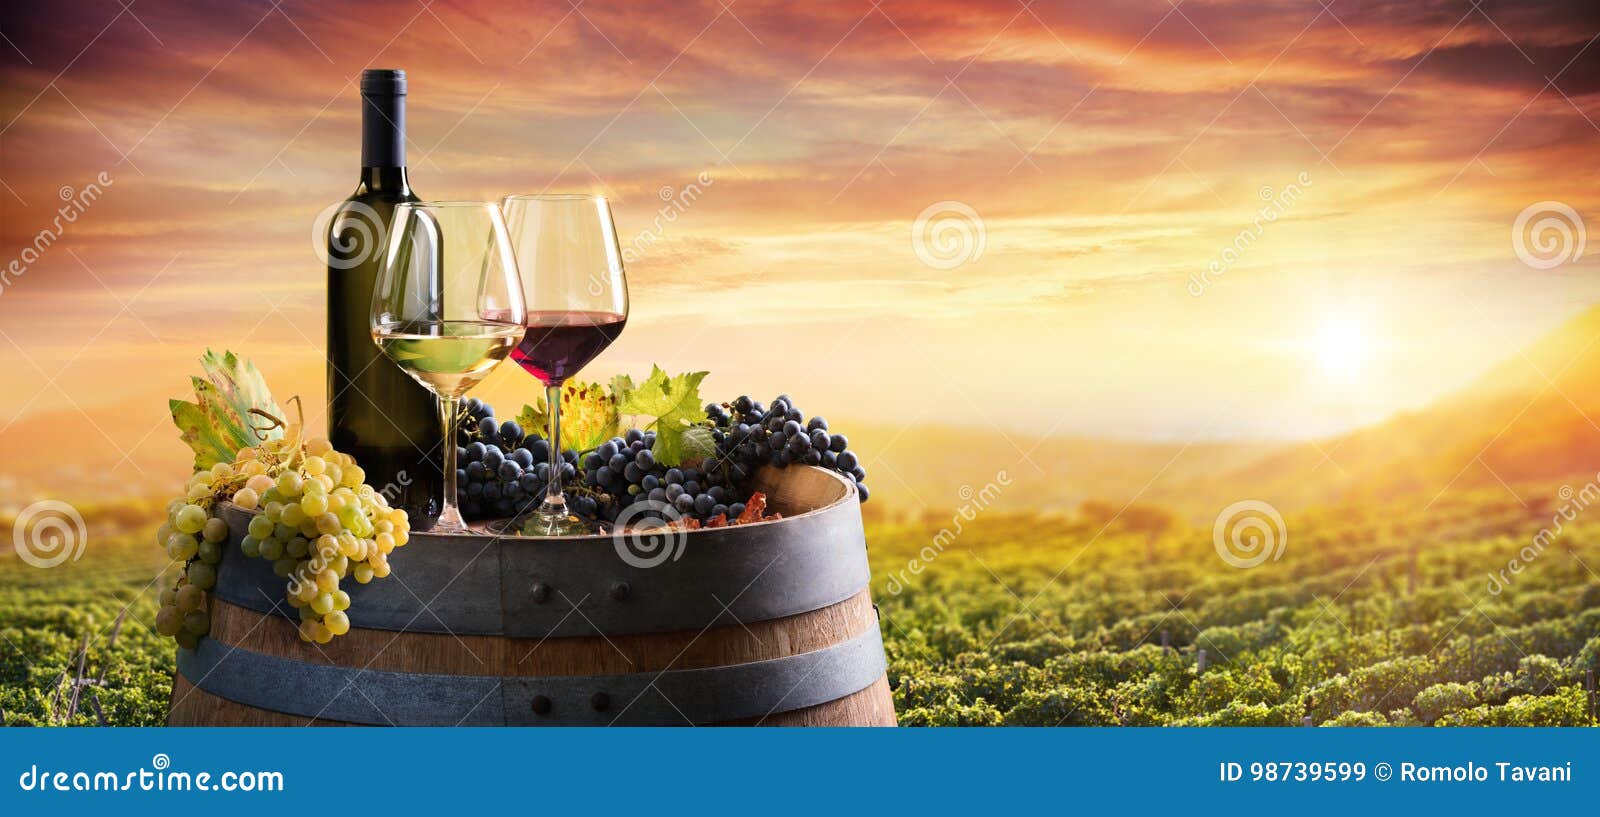 bottle and wineglasses on barrel in vineyard